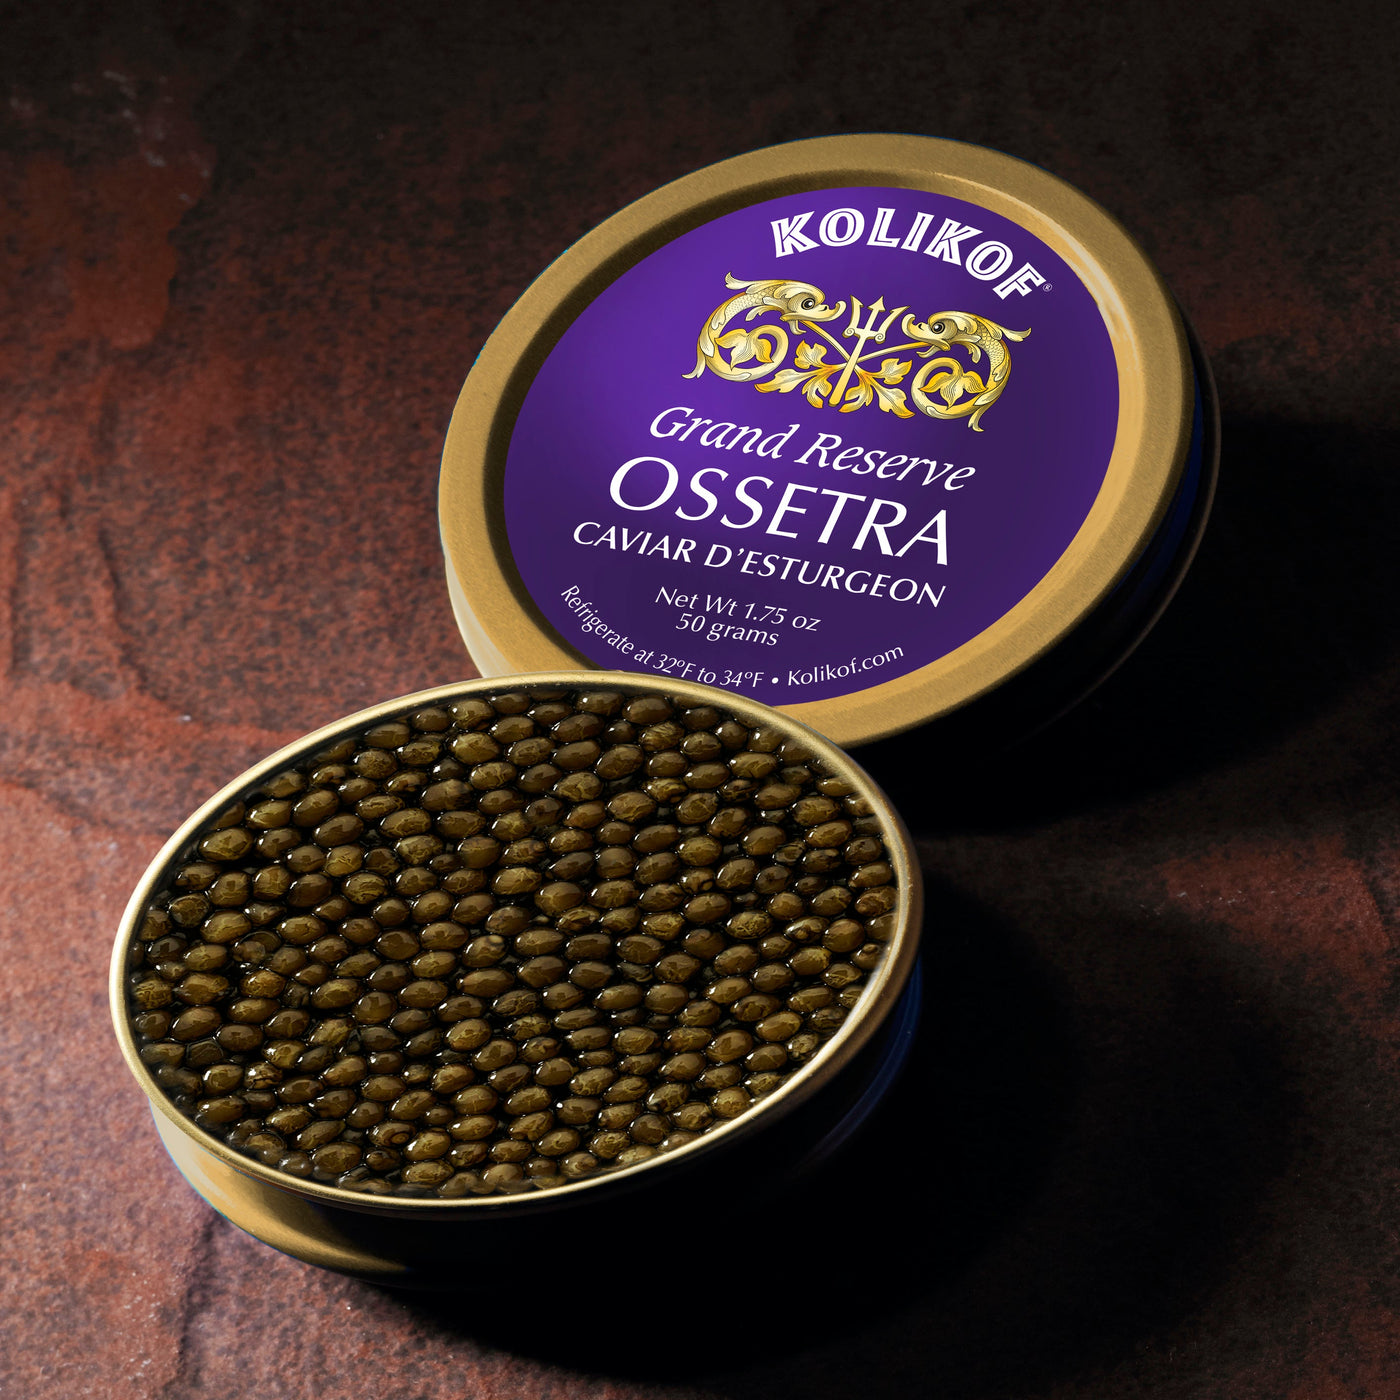 Russian Ossetra Caviar Grand Reserve by Kolikof Caviar the Best Caviar